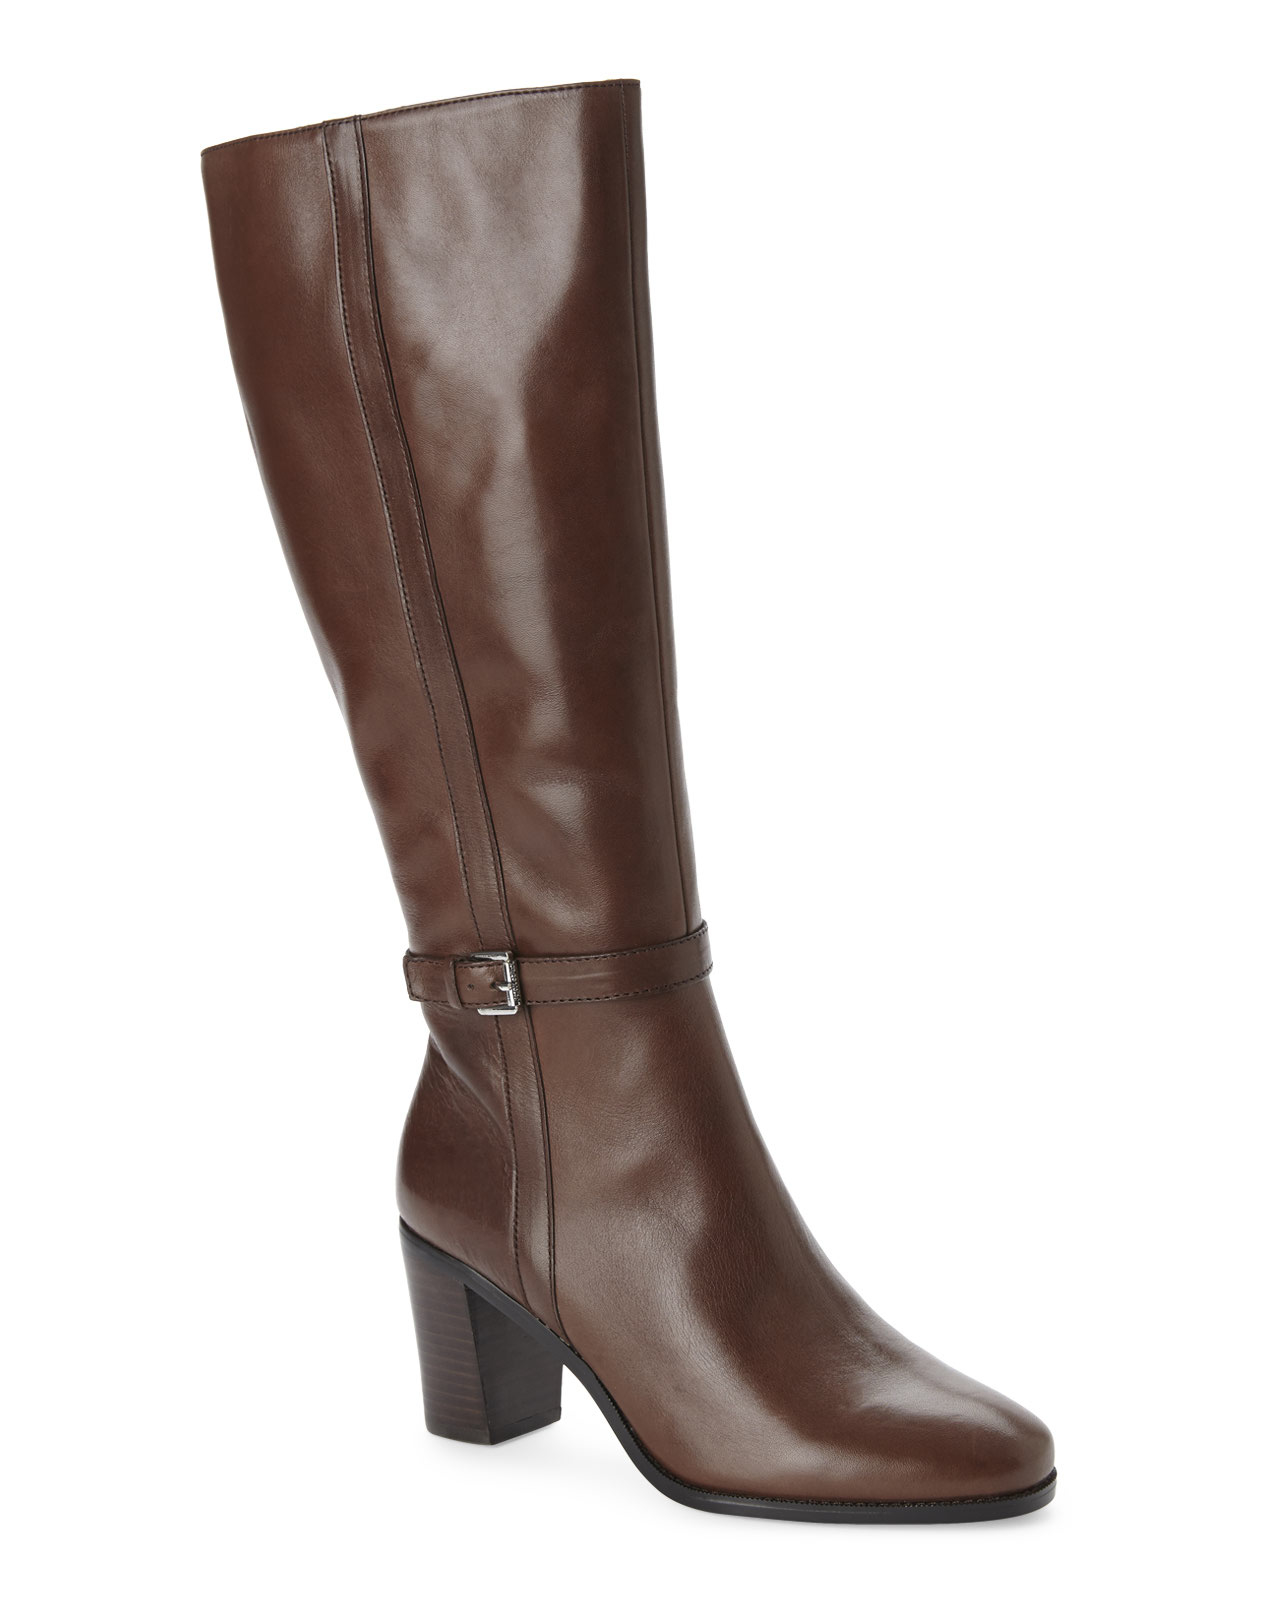 Lyst - Lauren by ralph lauren Chocolate Clare Riding Boots in Brown